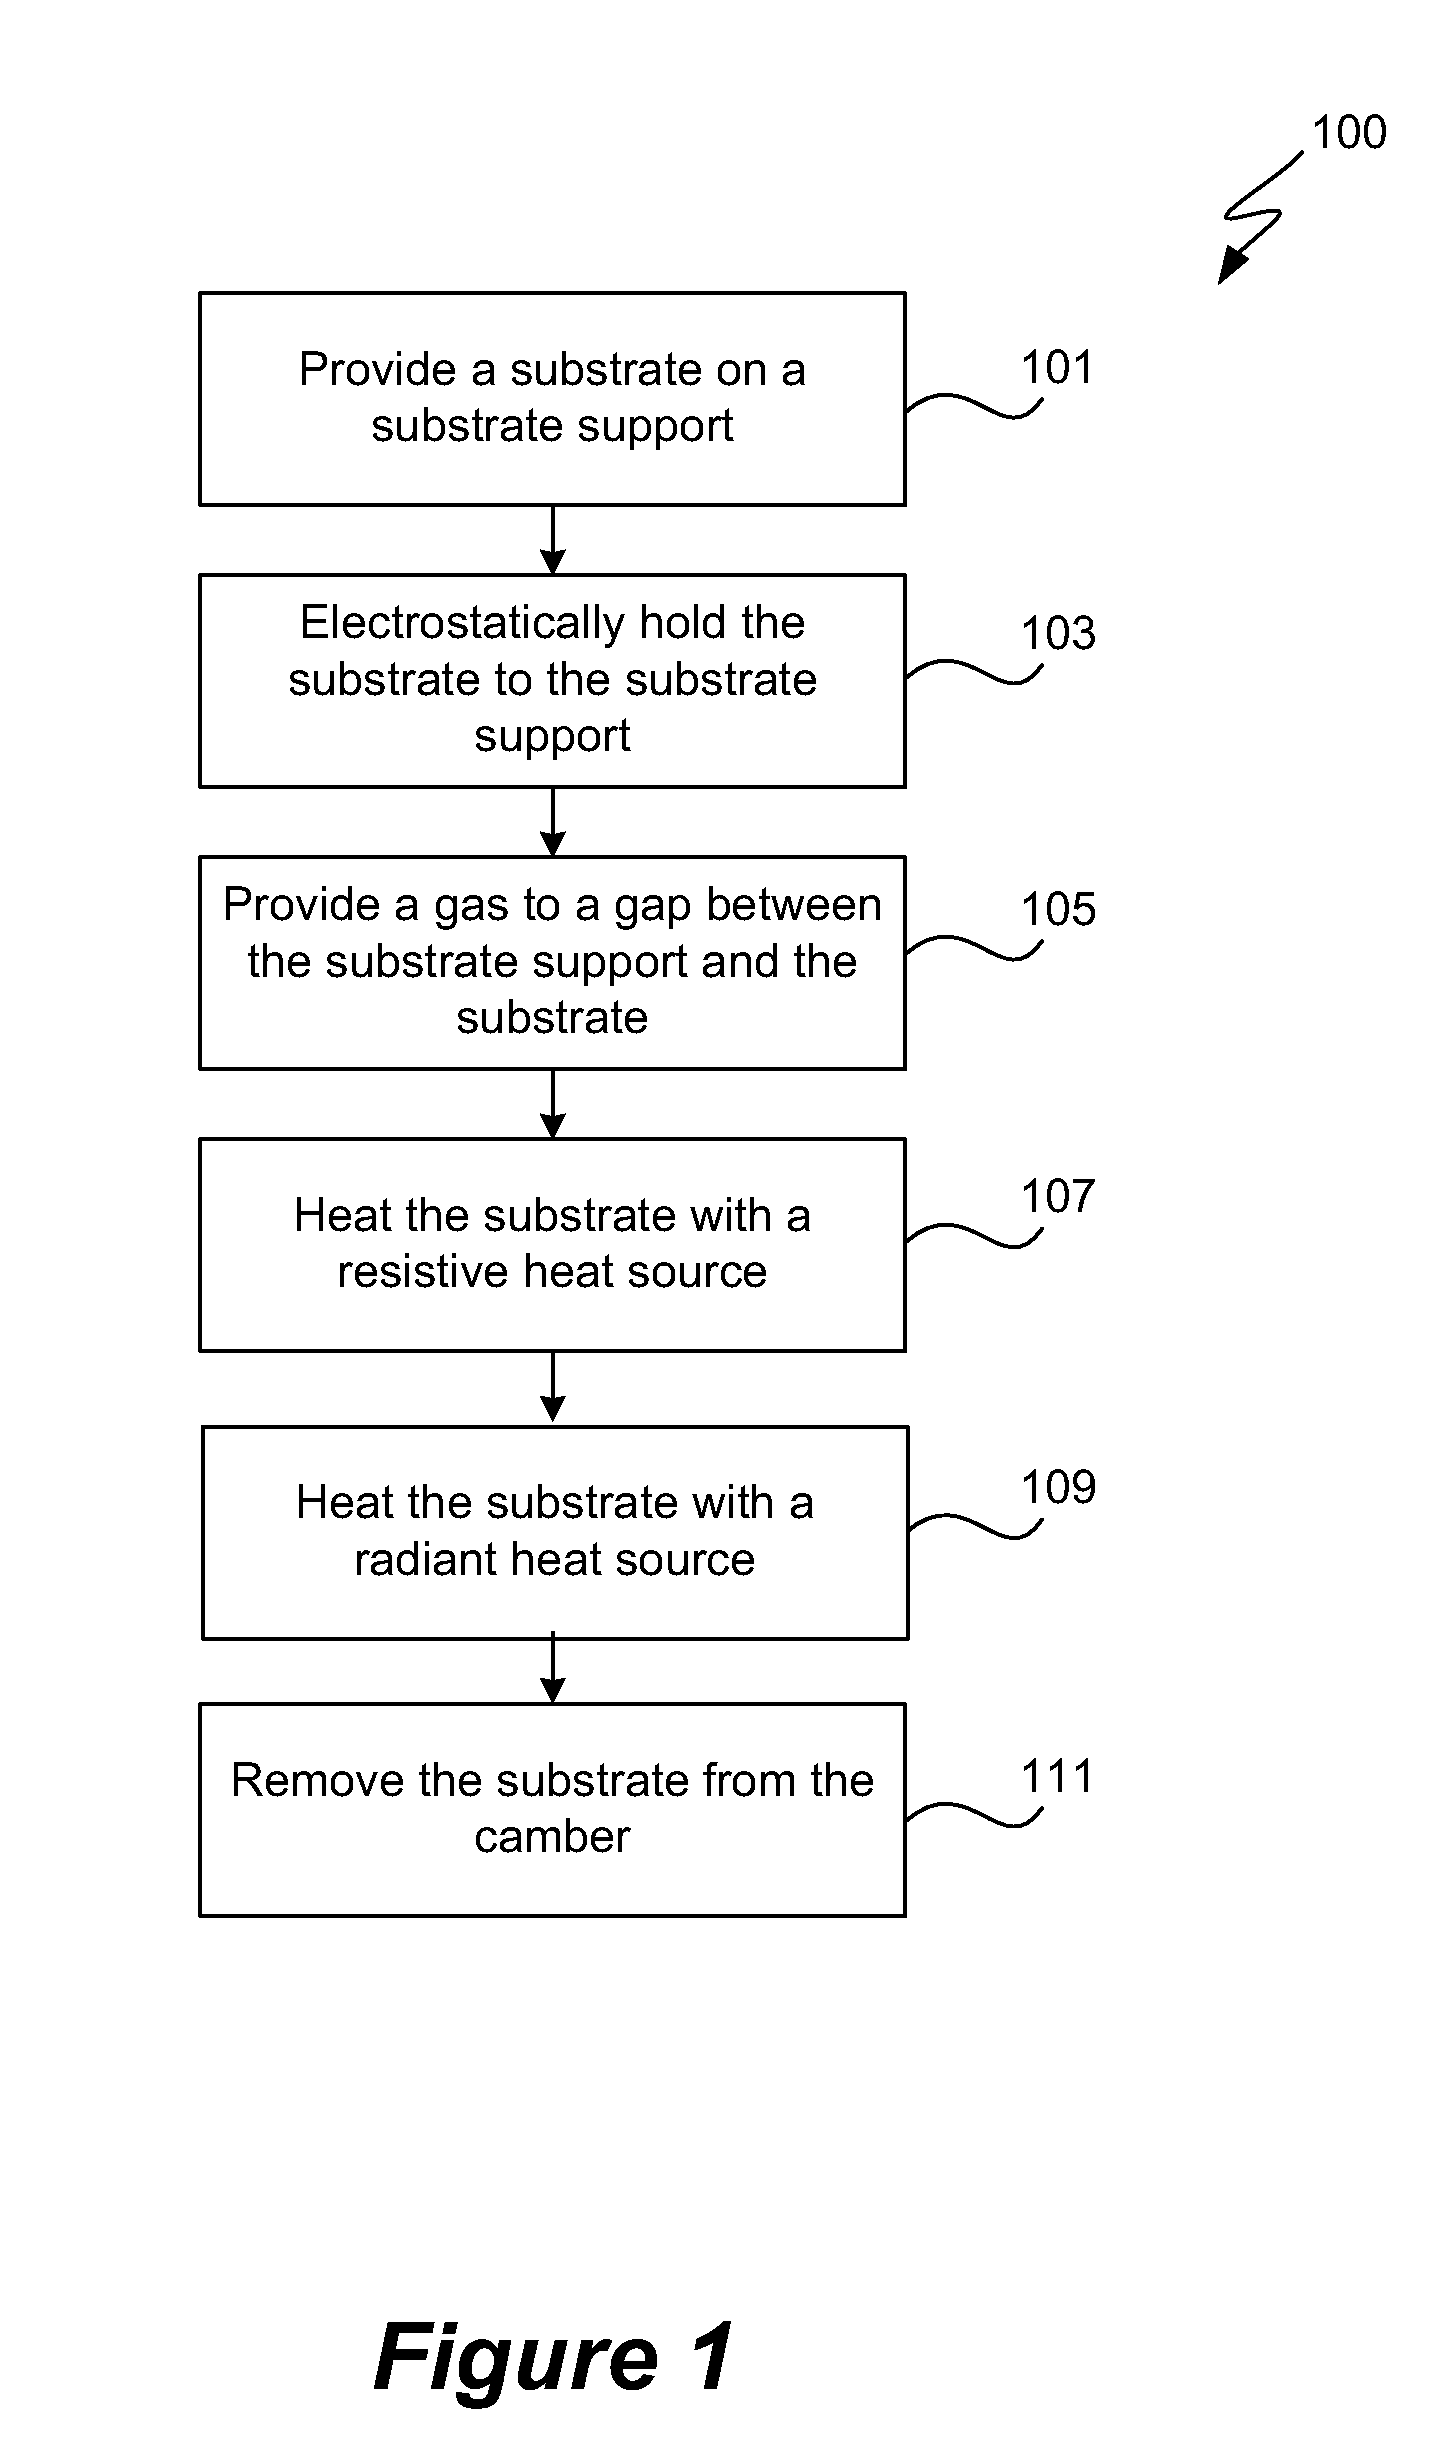 Load lock design for rapid wafer heating